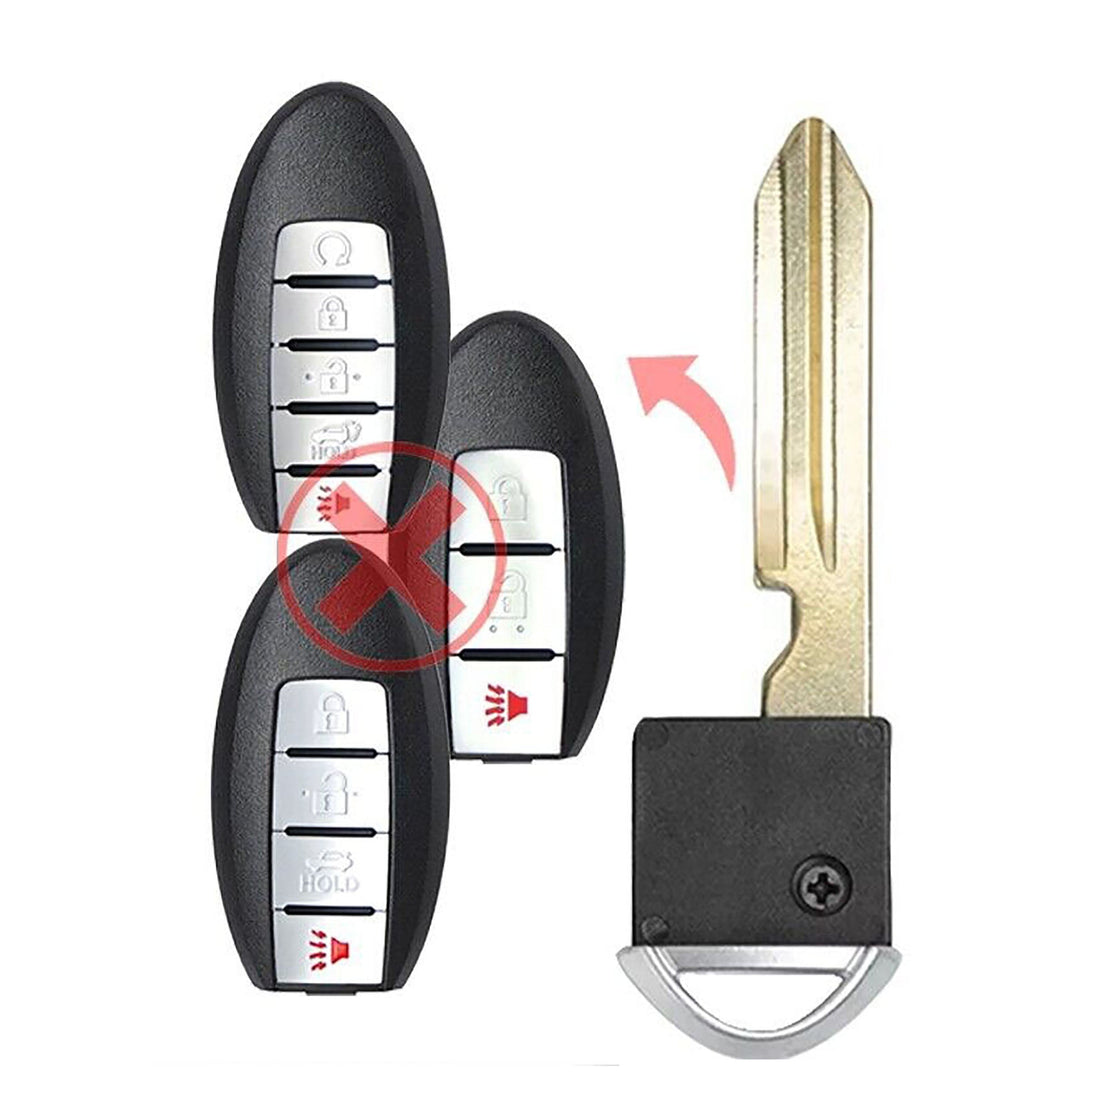 2015 Infiniti Q40 Replacement Uncut Insert Key Blade